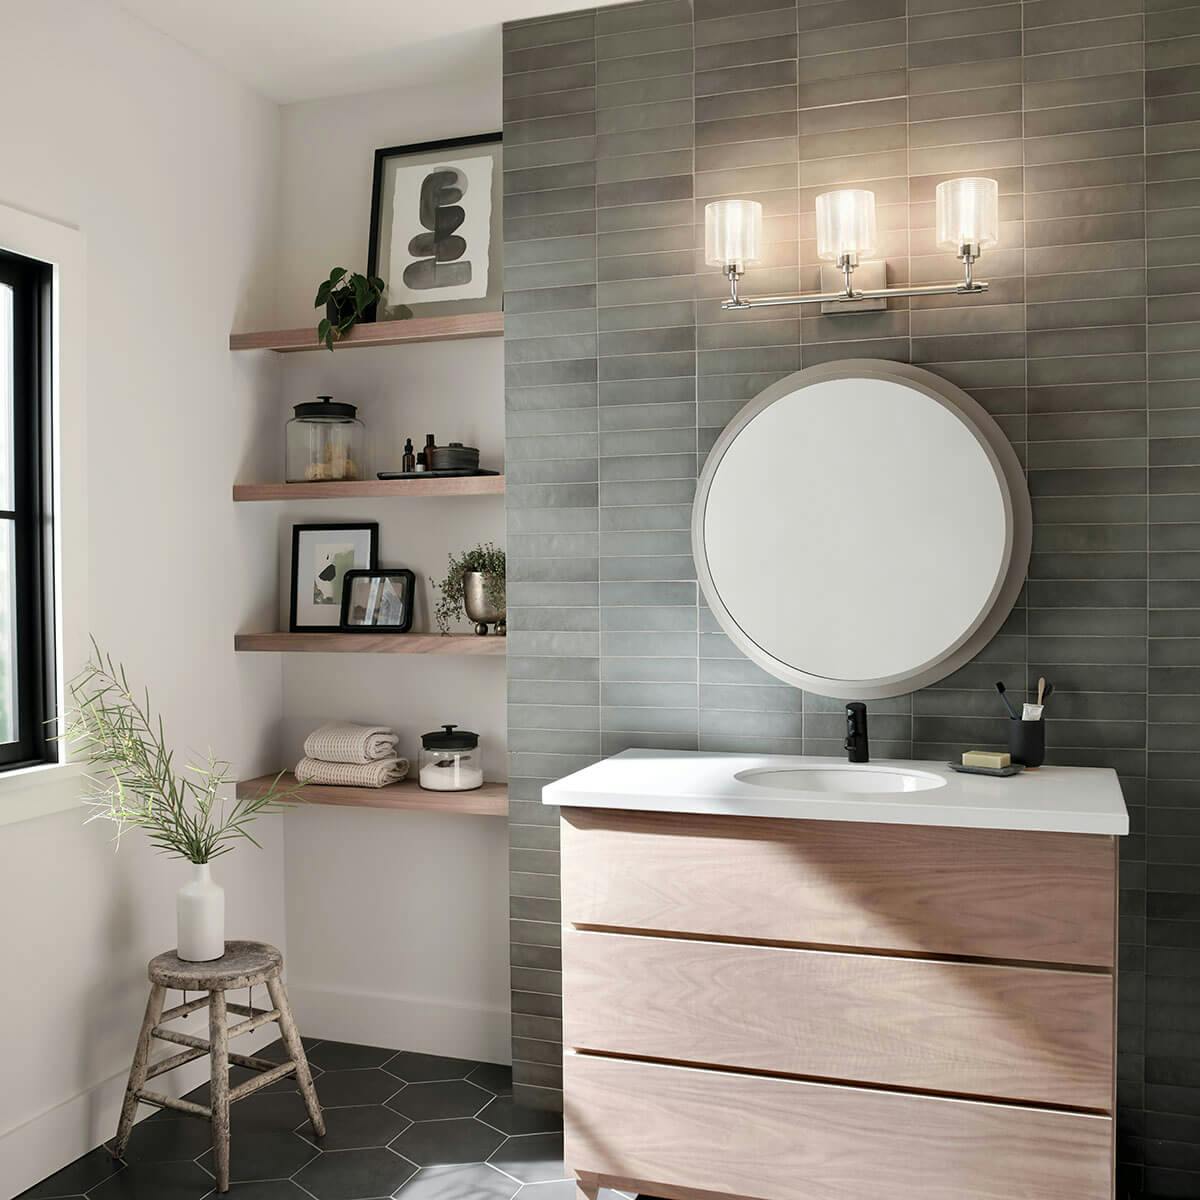 Day time Bathroom featuring Harvan vanity light 55107SN